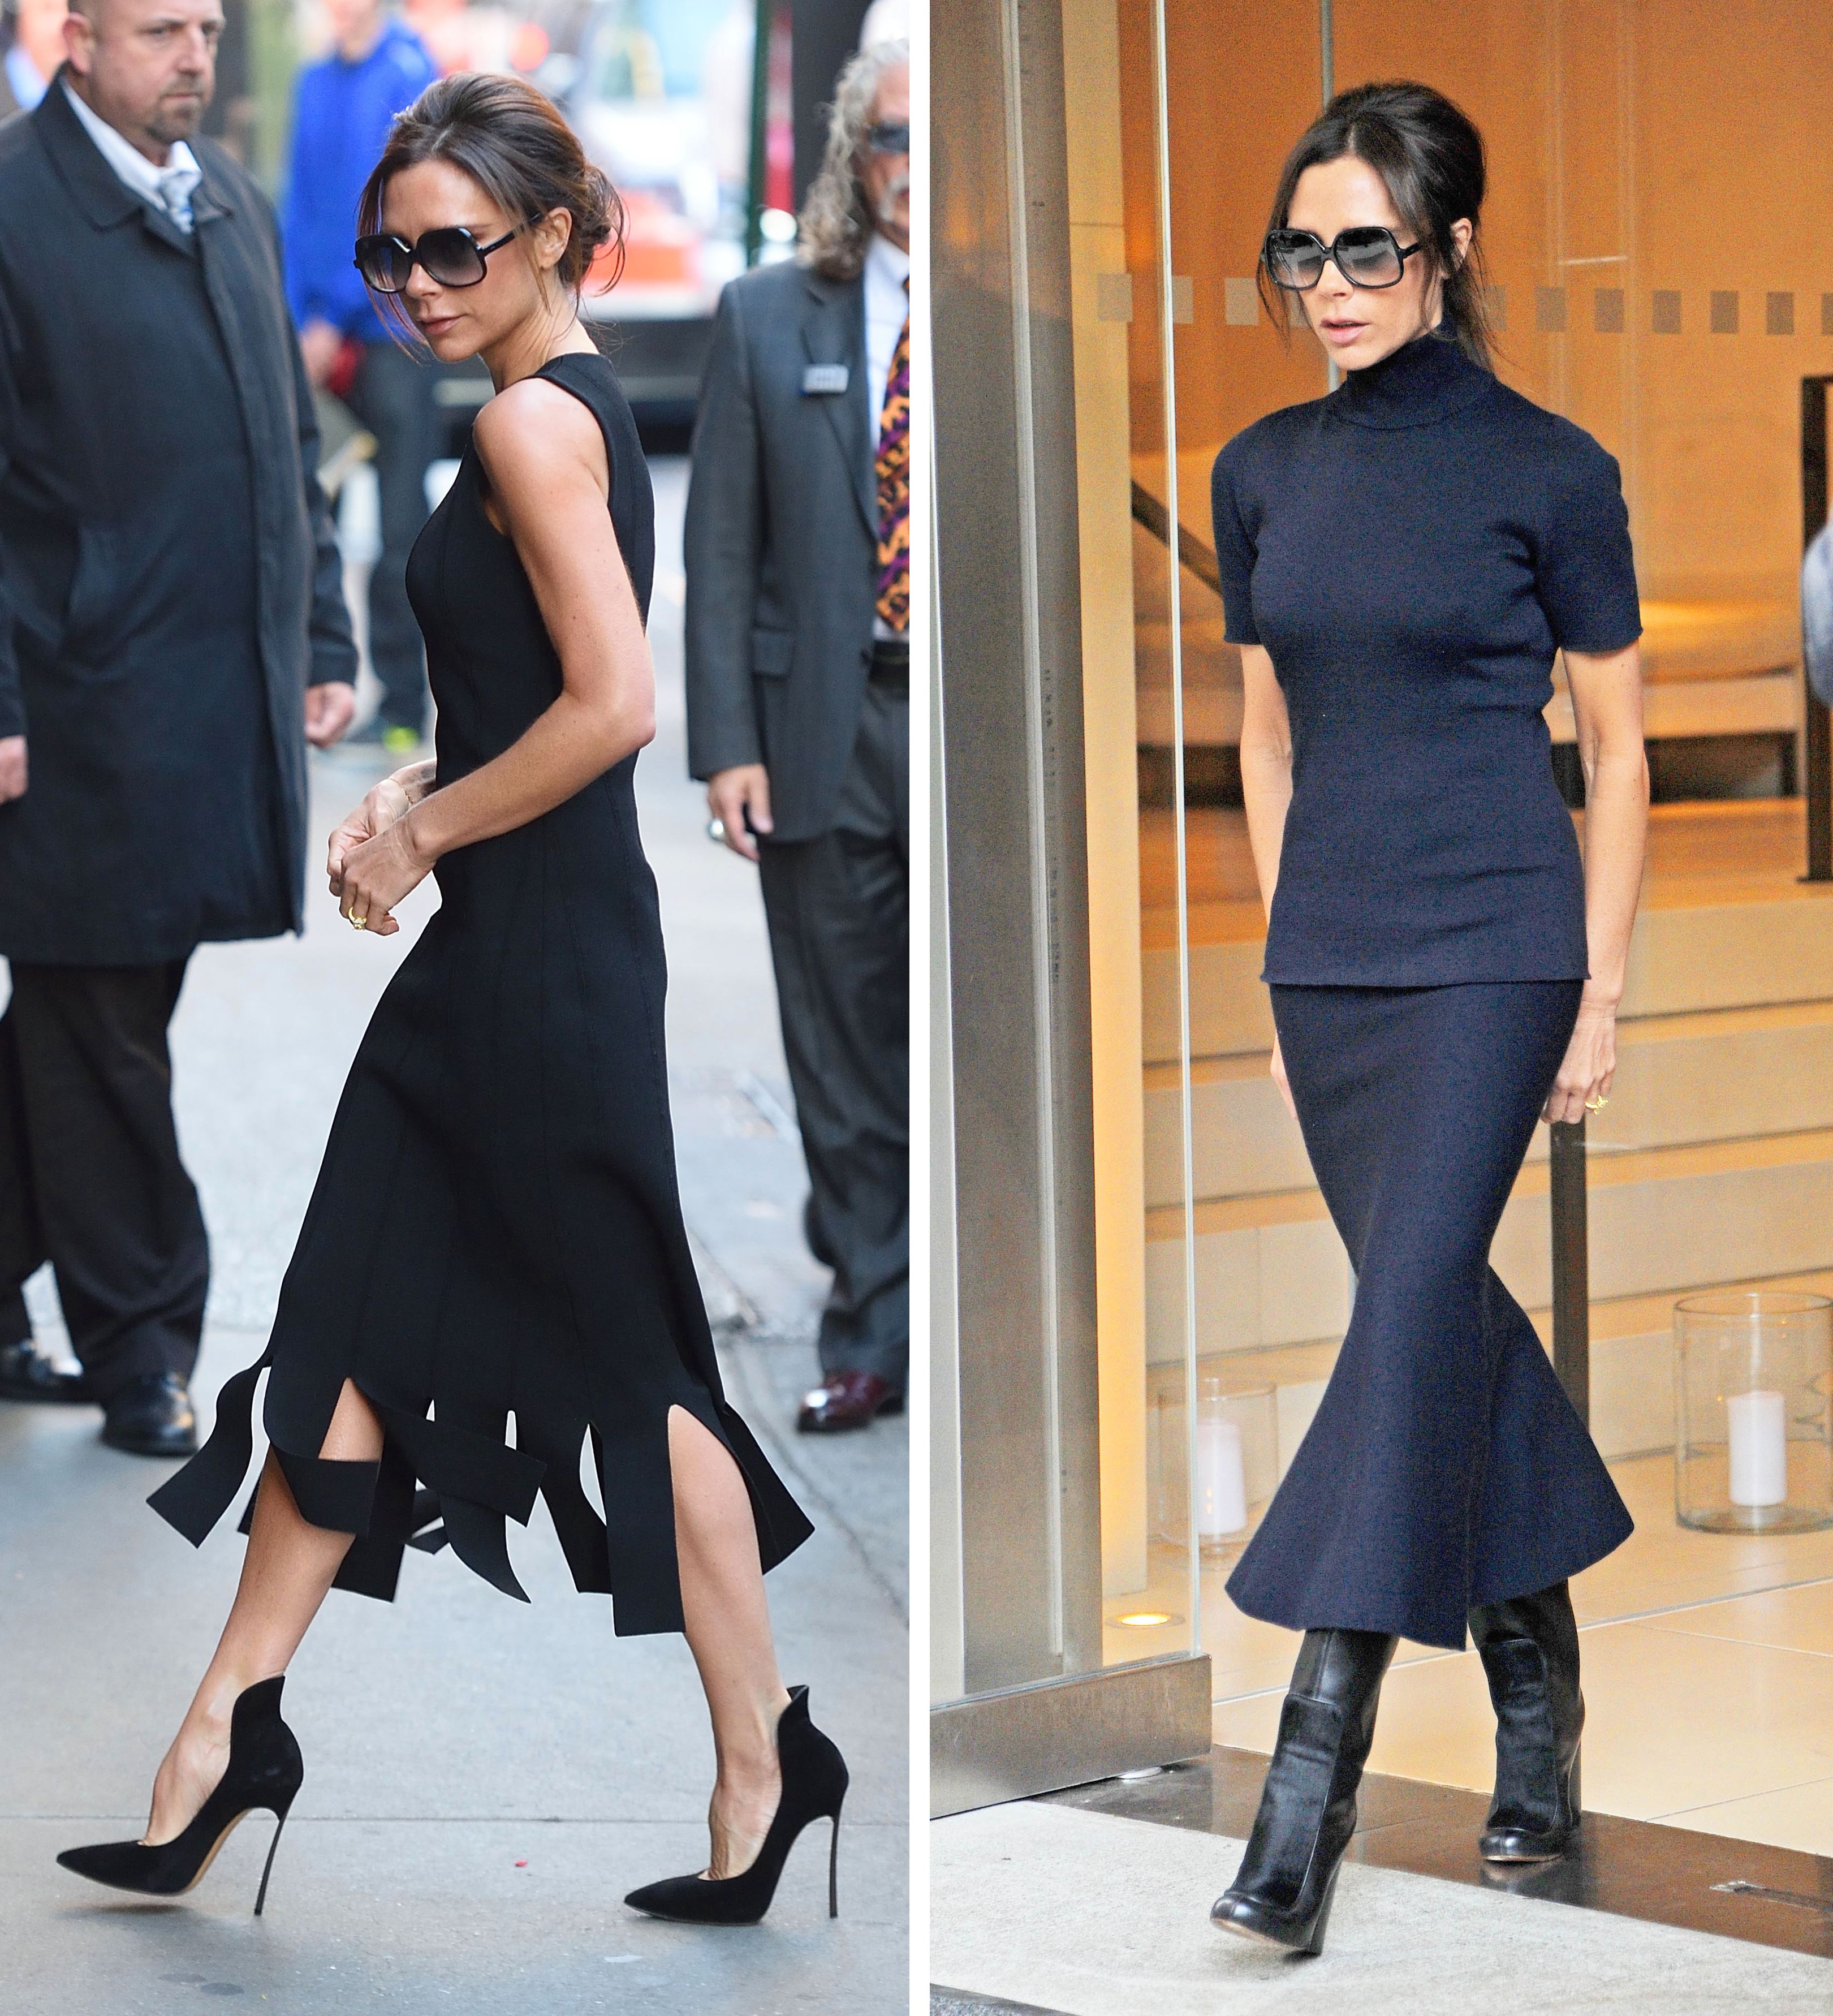 Victoria Beckham wearing a black dress and heels; Victoria Beckham wearing a black dress and boots